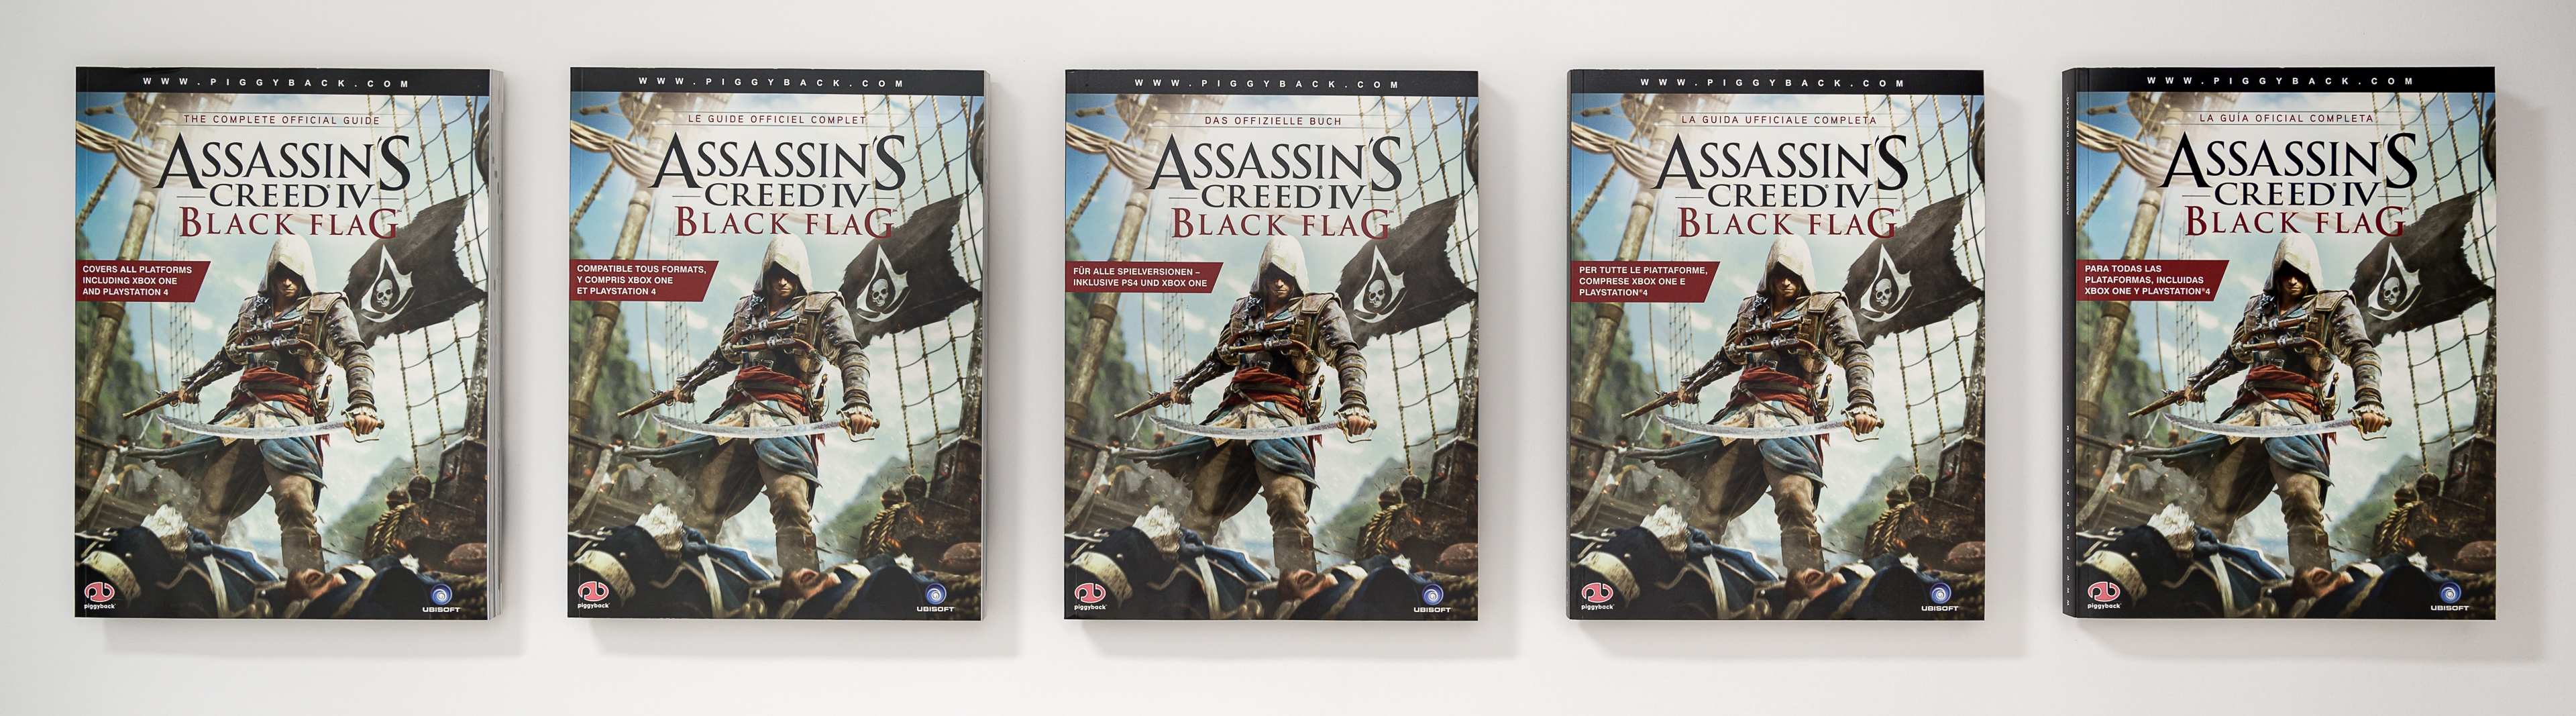 Assassin's Creed Black Flag (Playstation 4) (PS4)